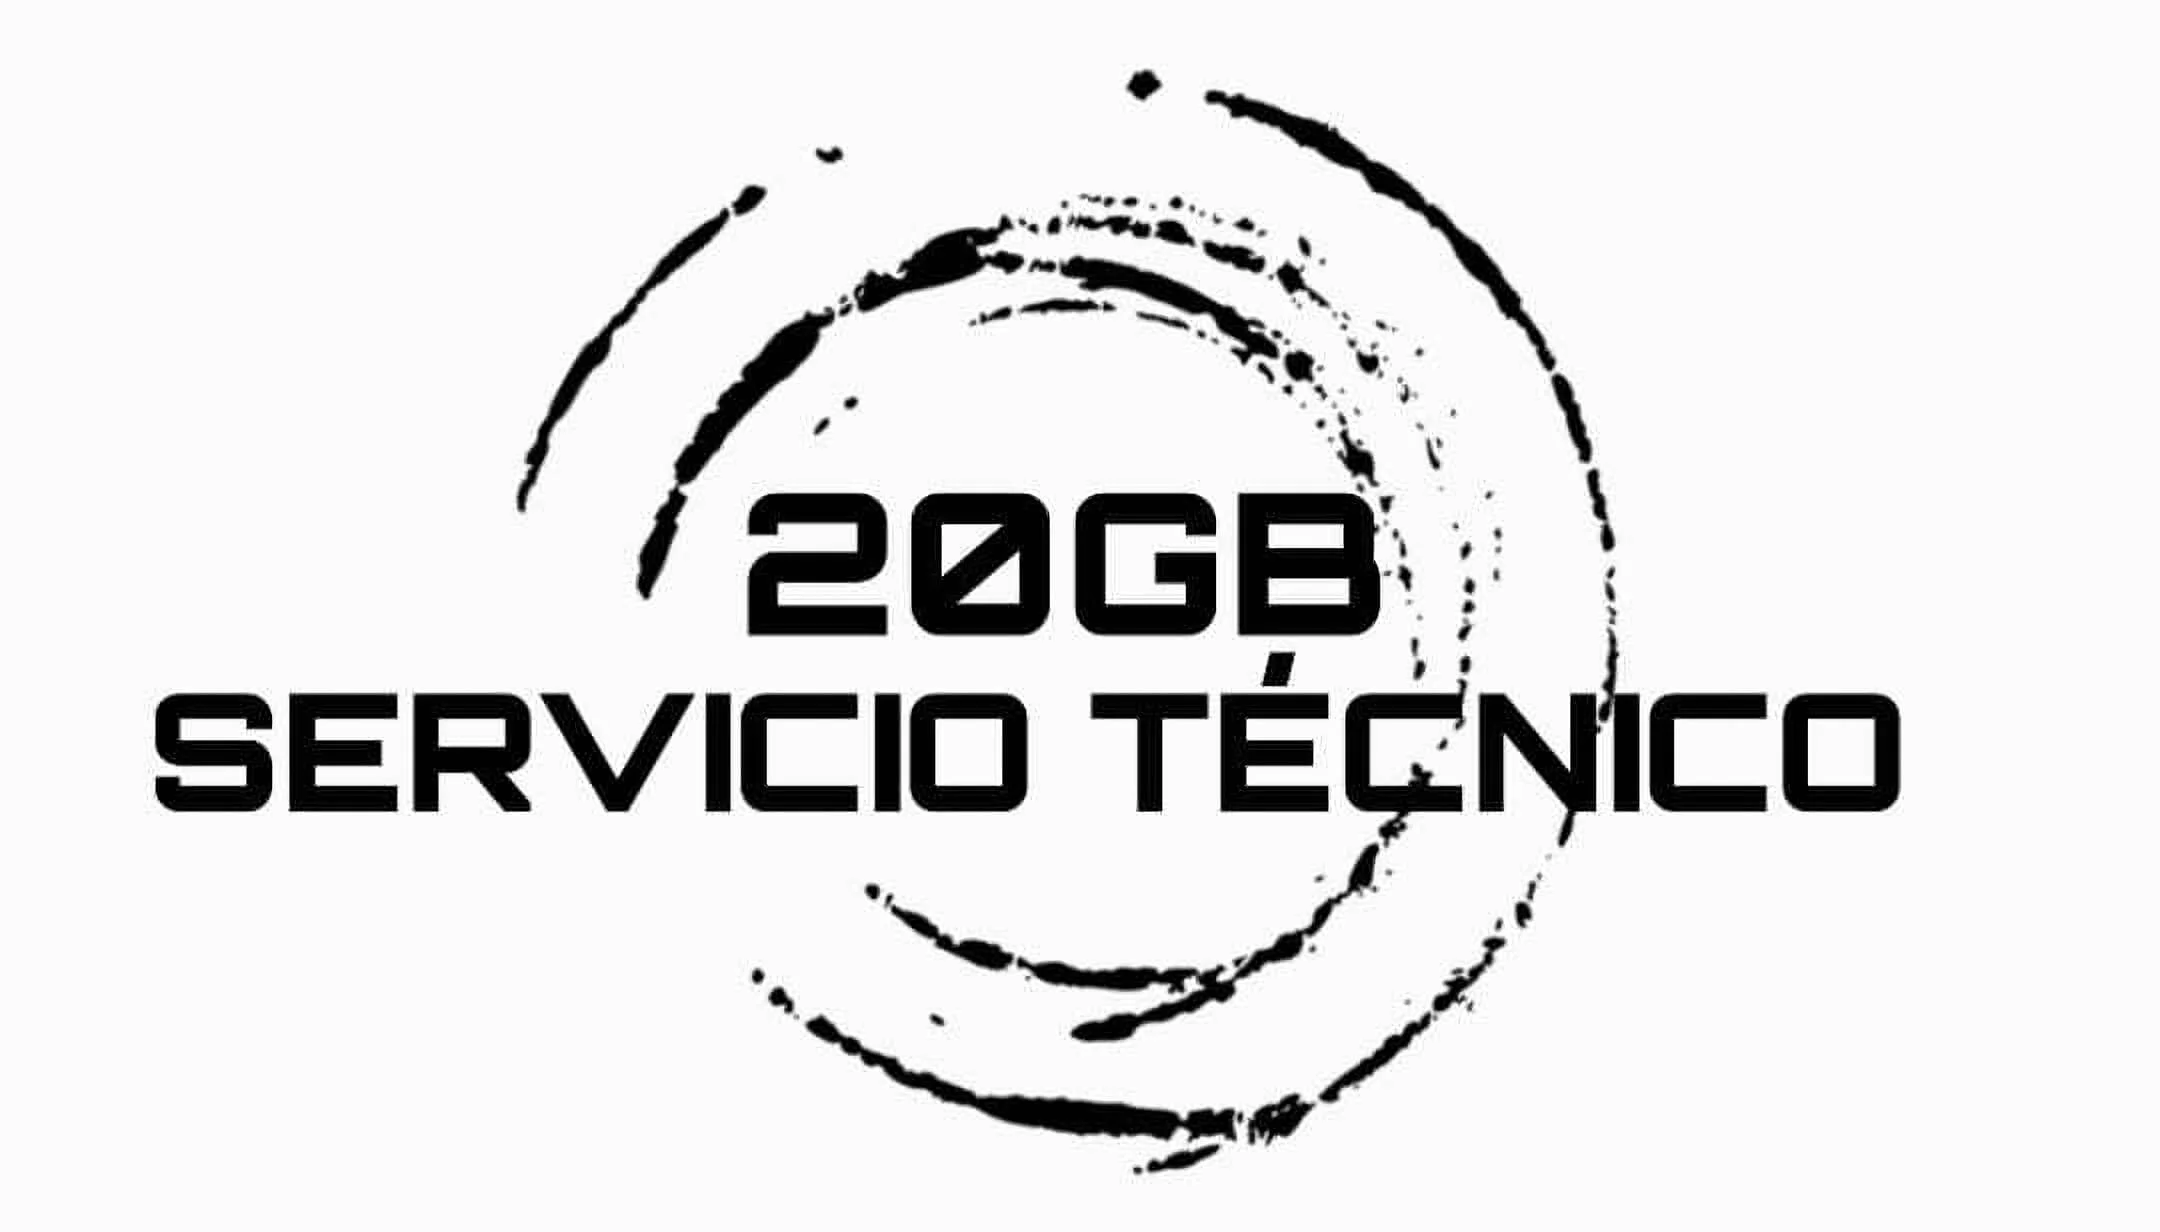 Celulares-servicio-tecnico-20gb-13757